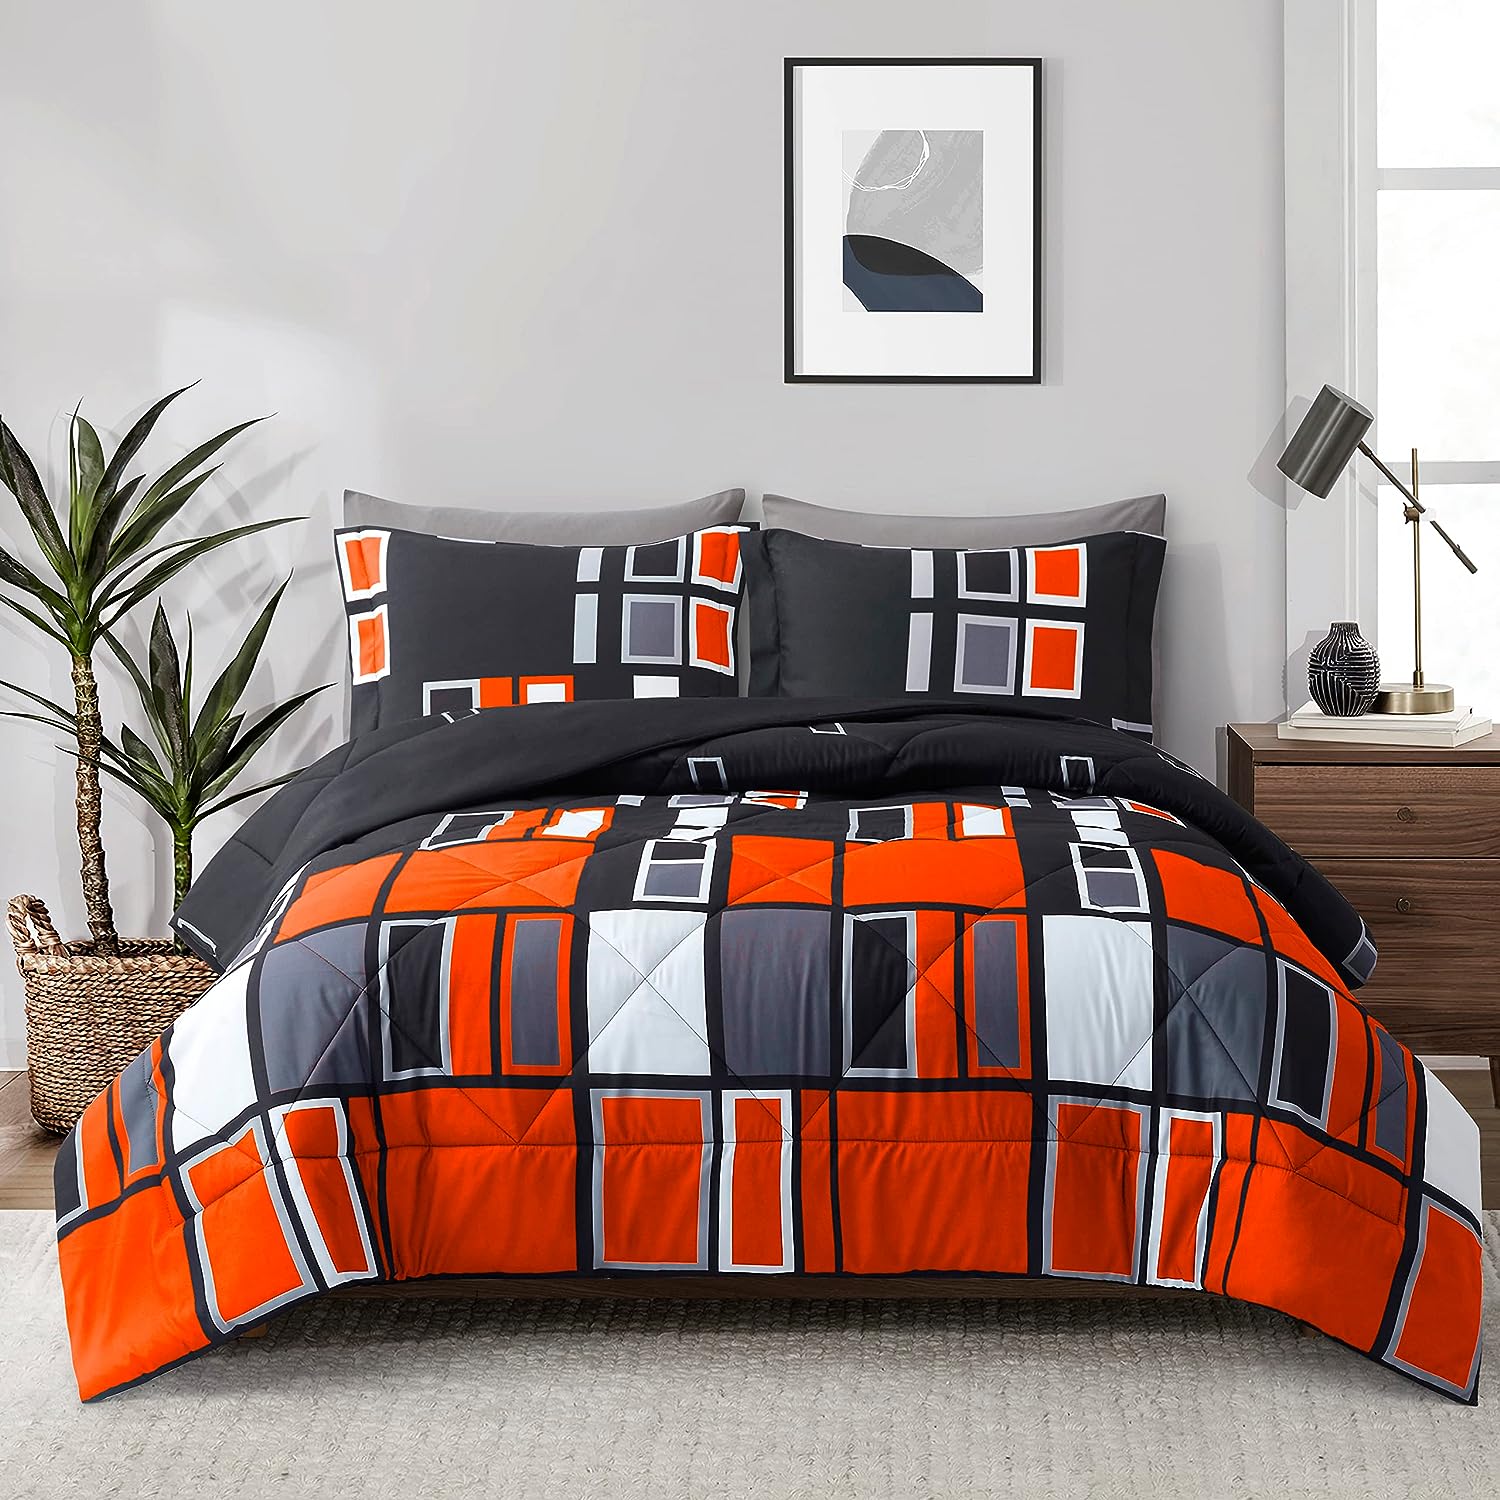 ARTALL Soft Microfiber Comforter Set Orange Gray Black Plaid, Twin Size with 1 Sham.